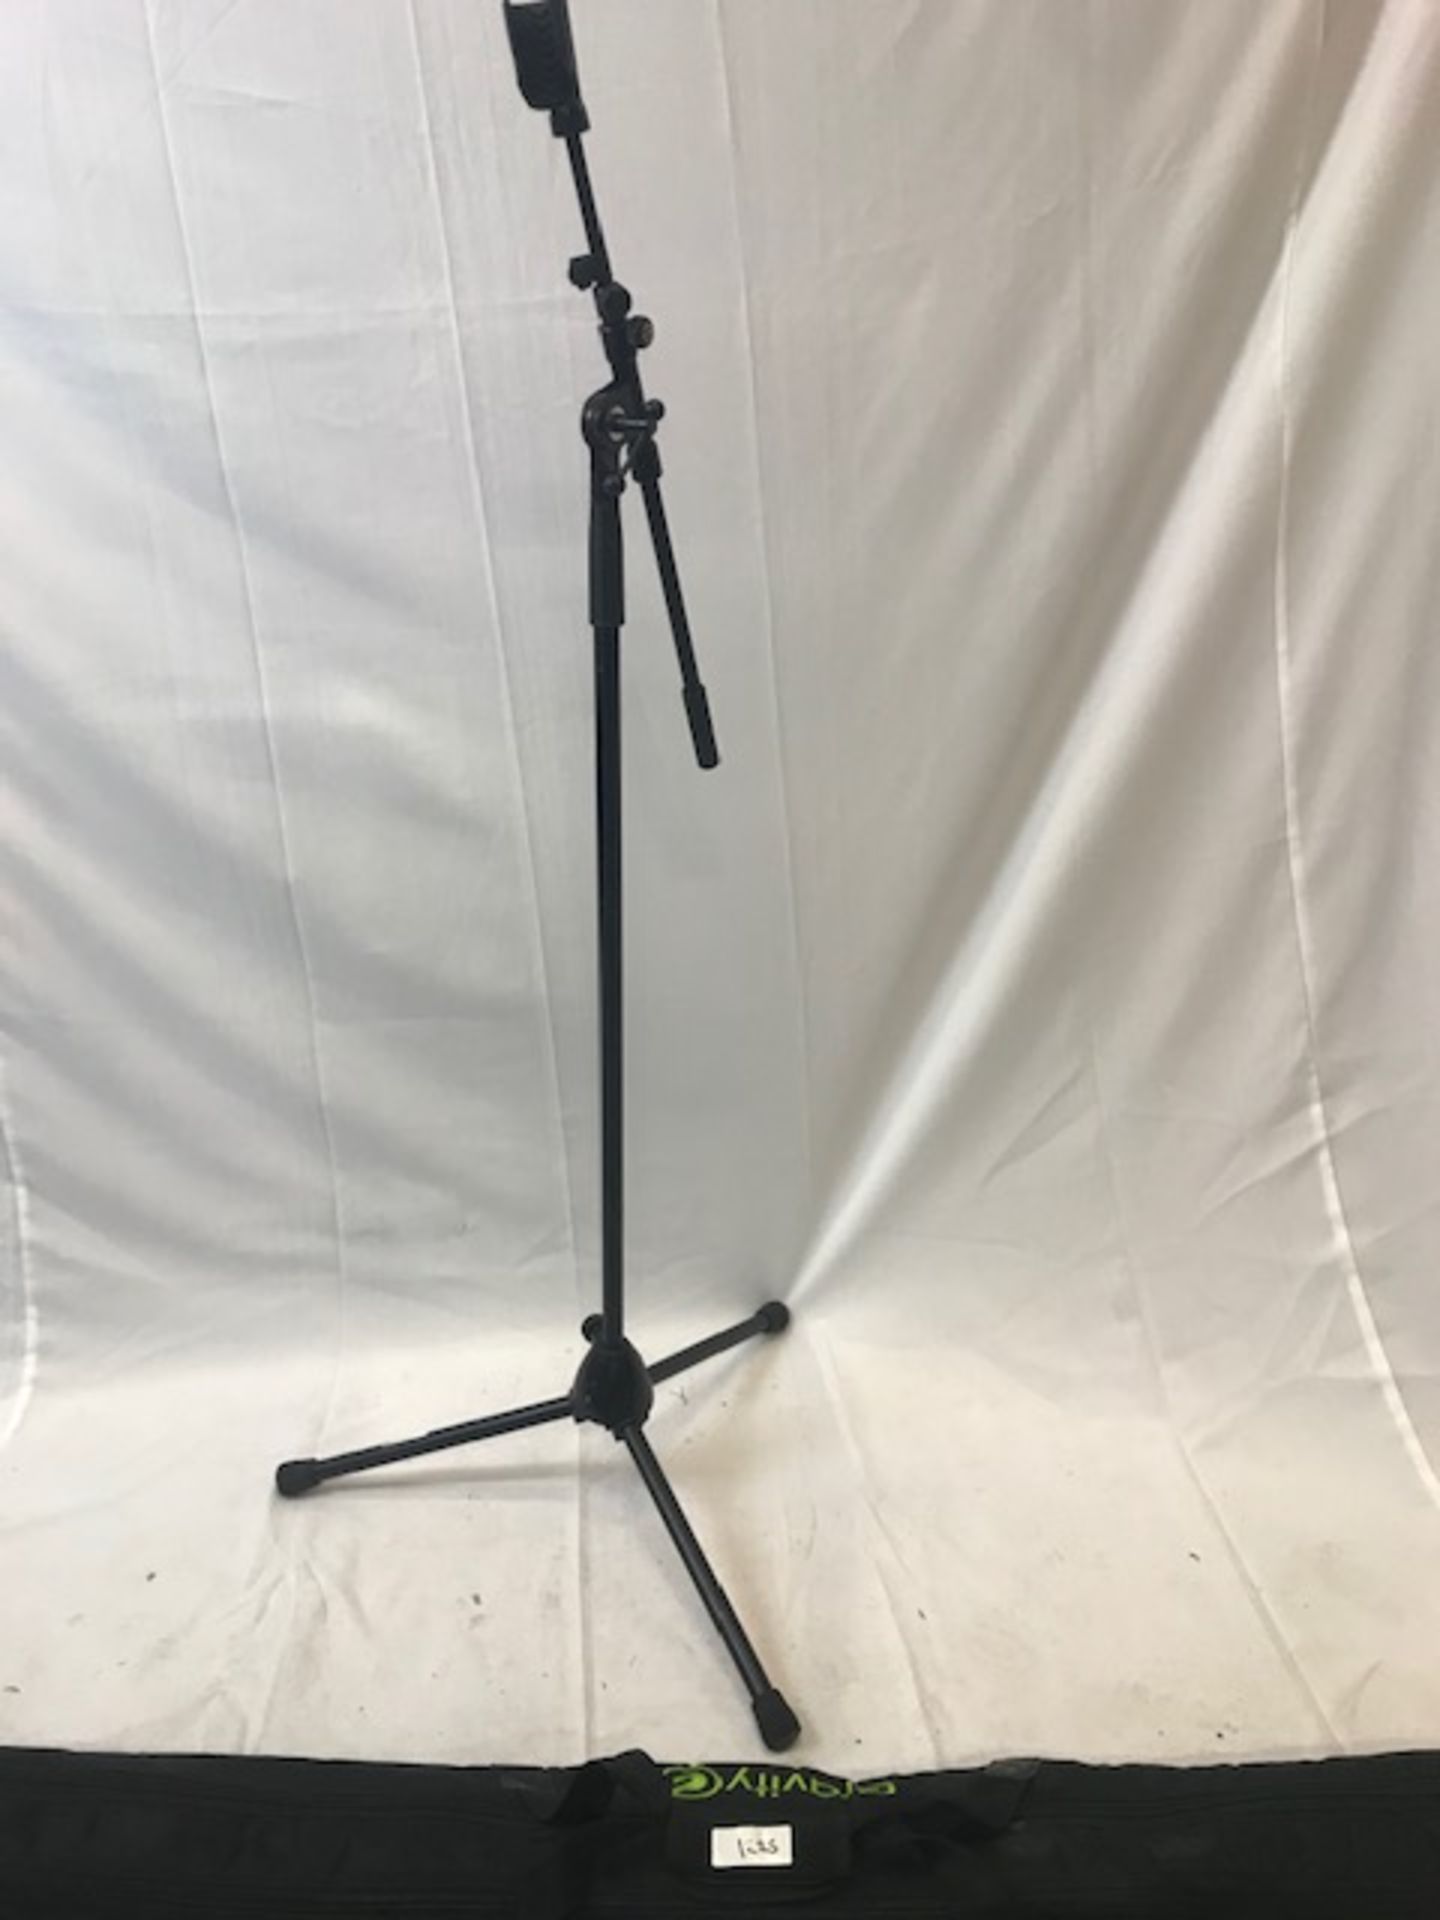 2 x K&M Microphone stands in Gravity bag - Ref: 1225 - CL581 - Location: Altrincham WA14